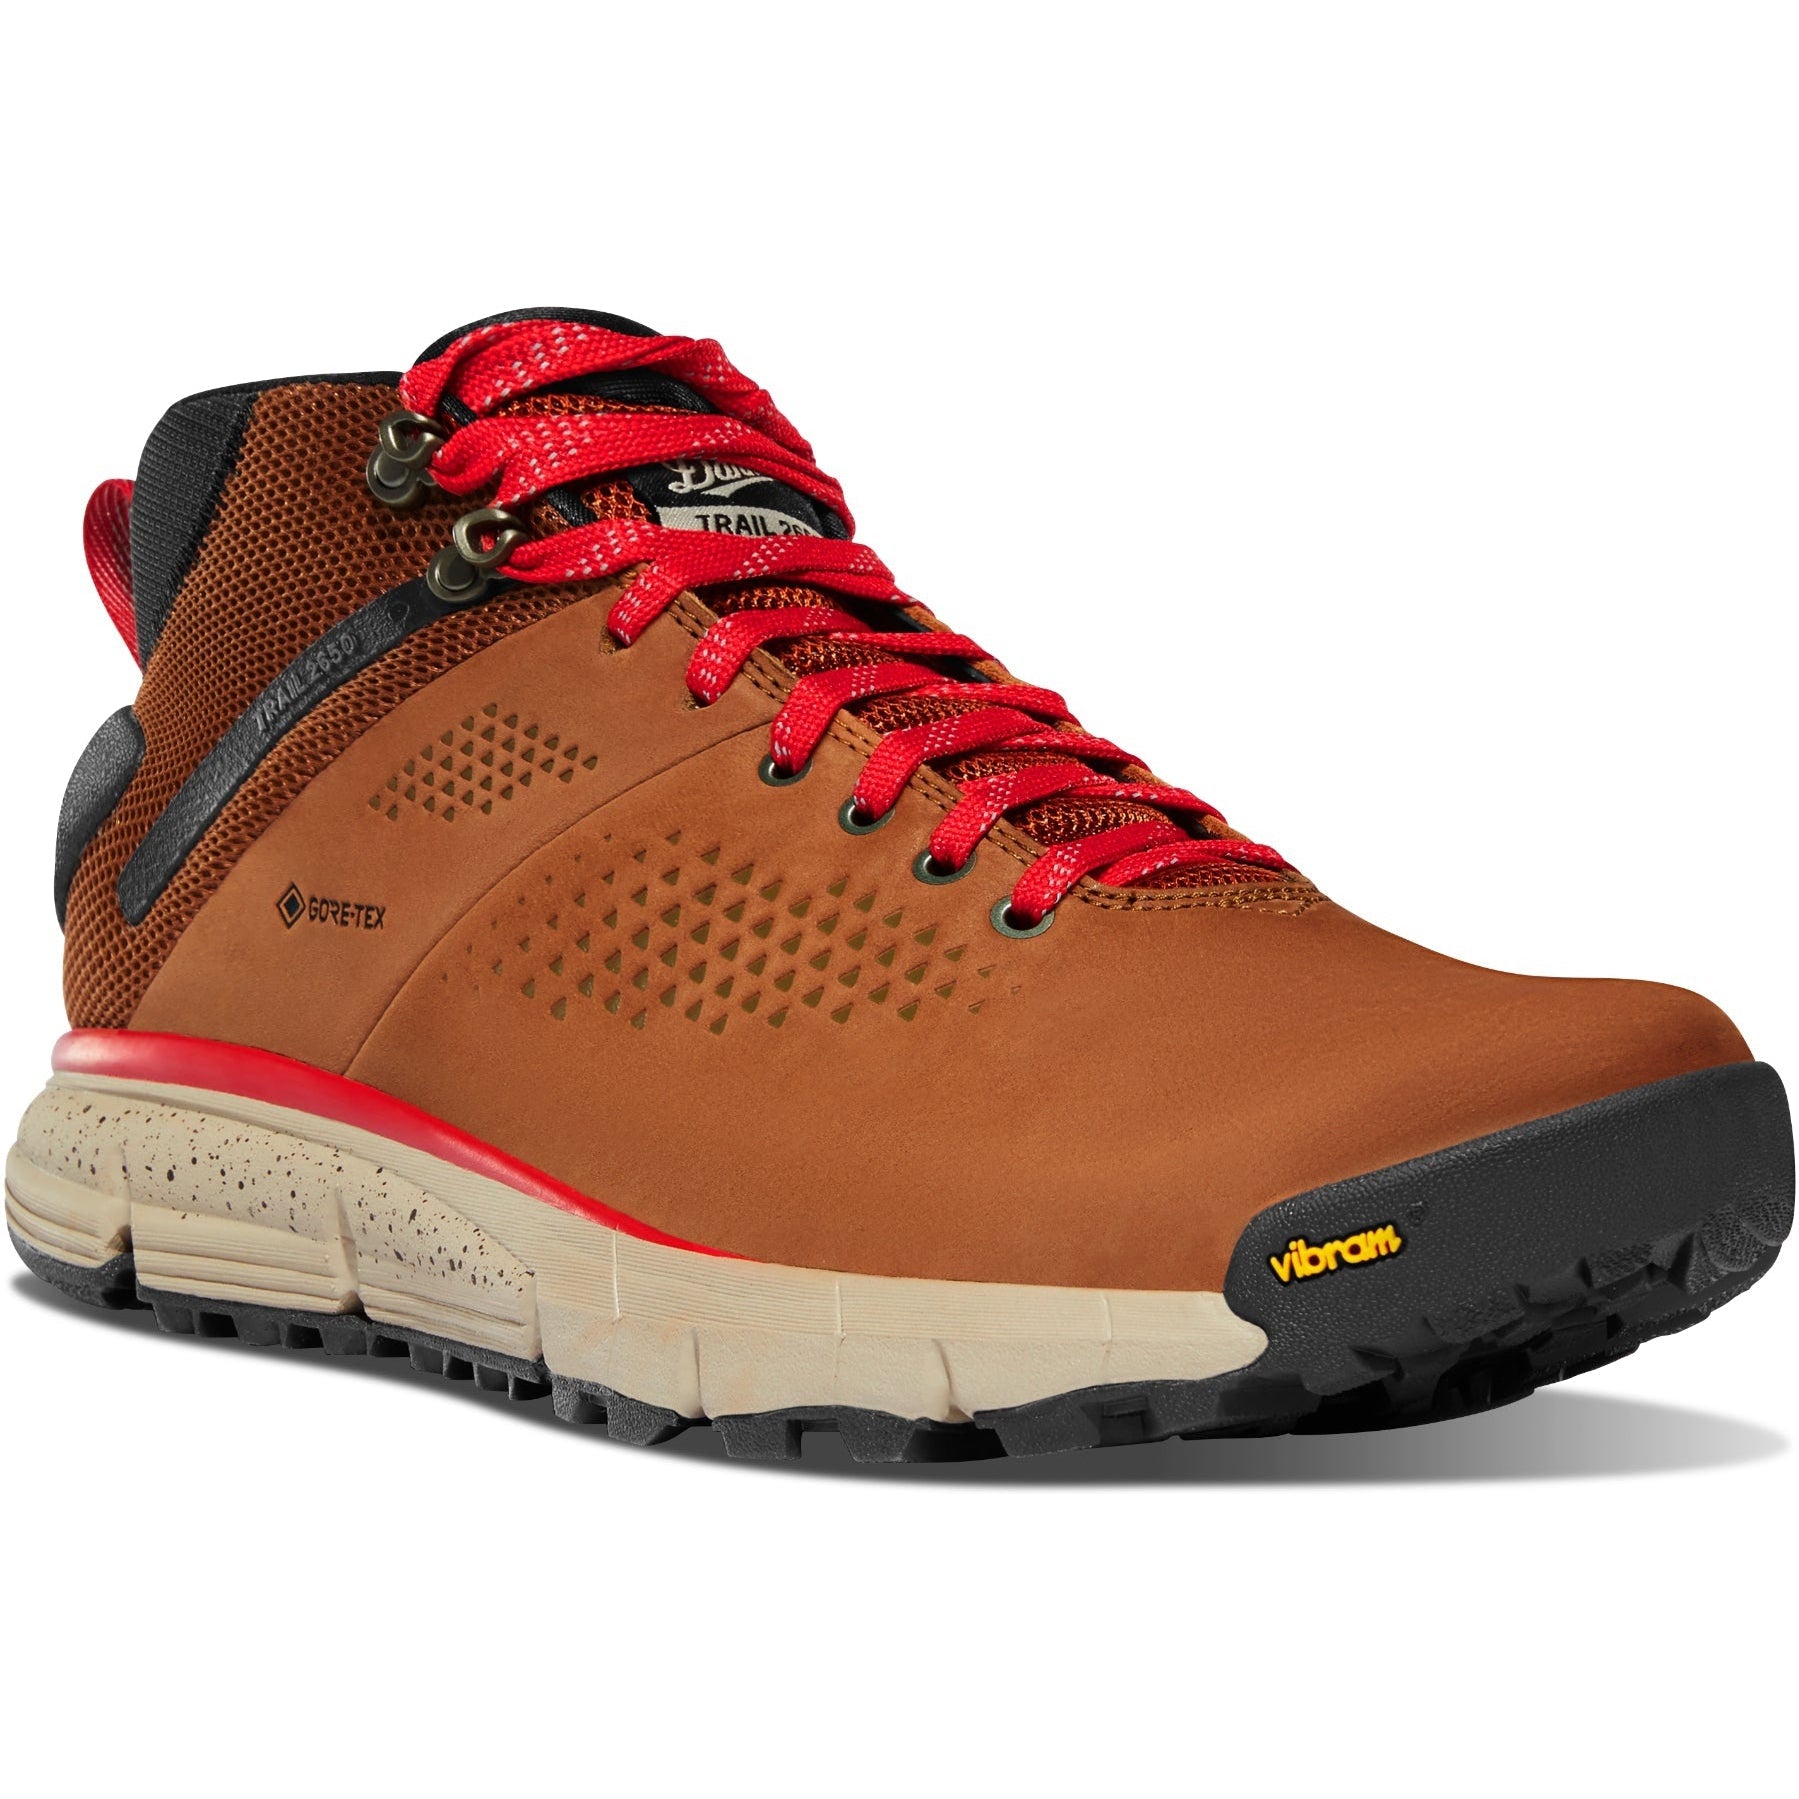 Danner Men's Trail 2650 GTX Mid 4" WP Hiking Shoe - Brown - 61249 7 / Medium / Brown - Overlook Boots